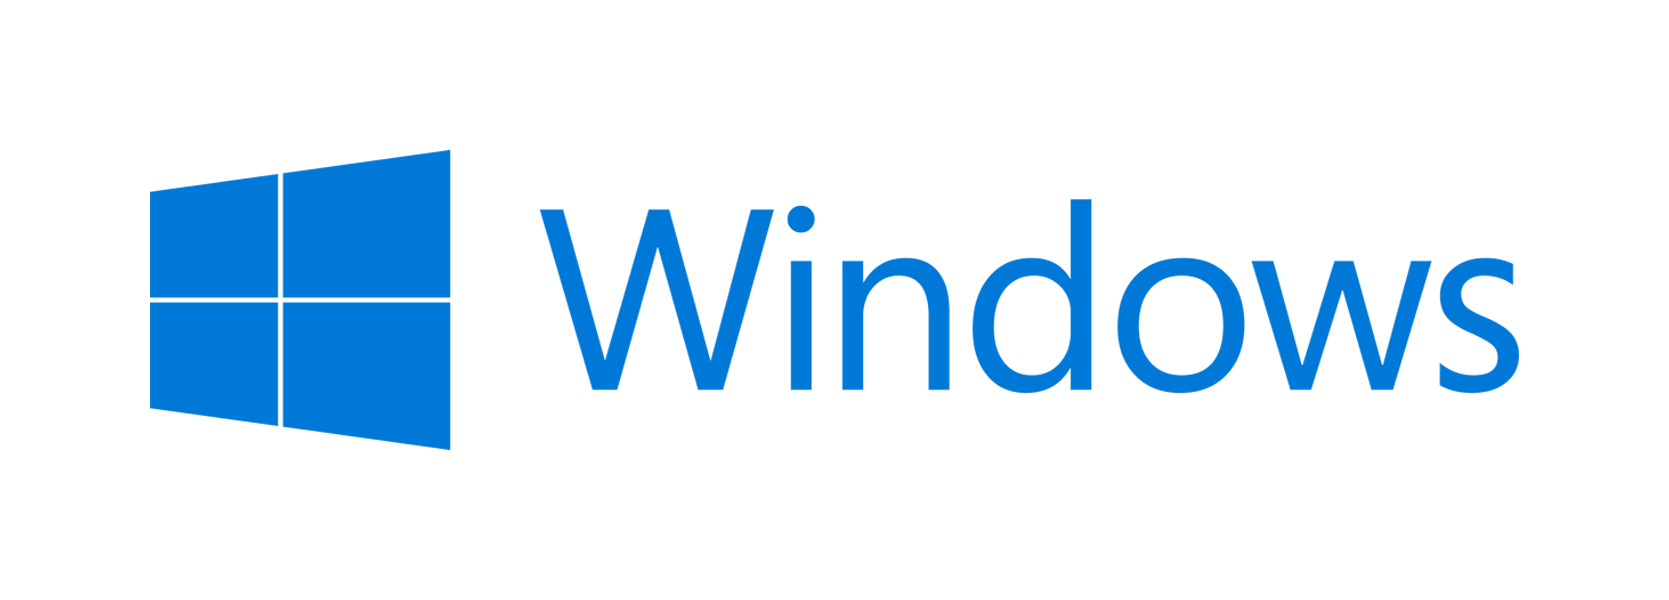 Official Microsoft Logo - Microsoft Trademark & Brand Guidelines | Trademarks